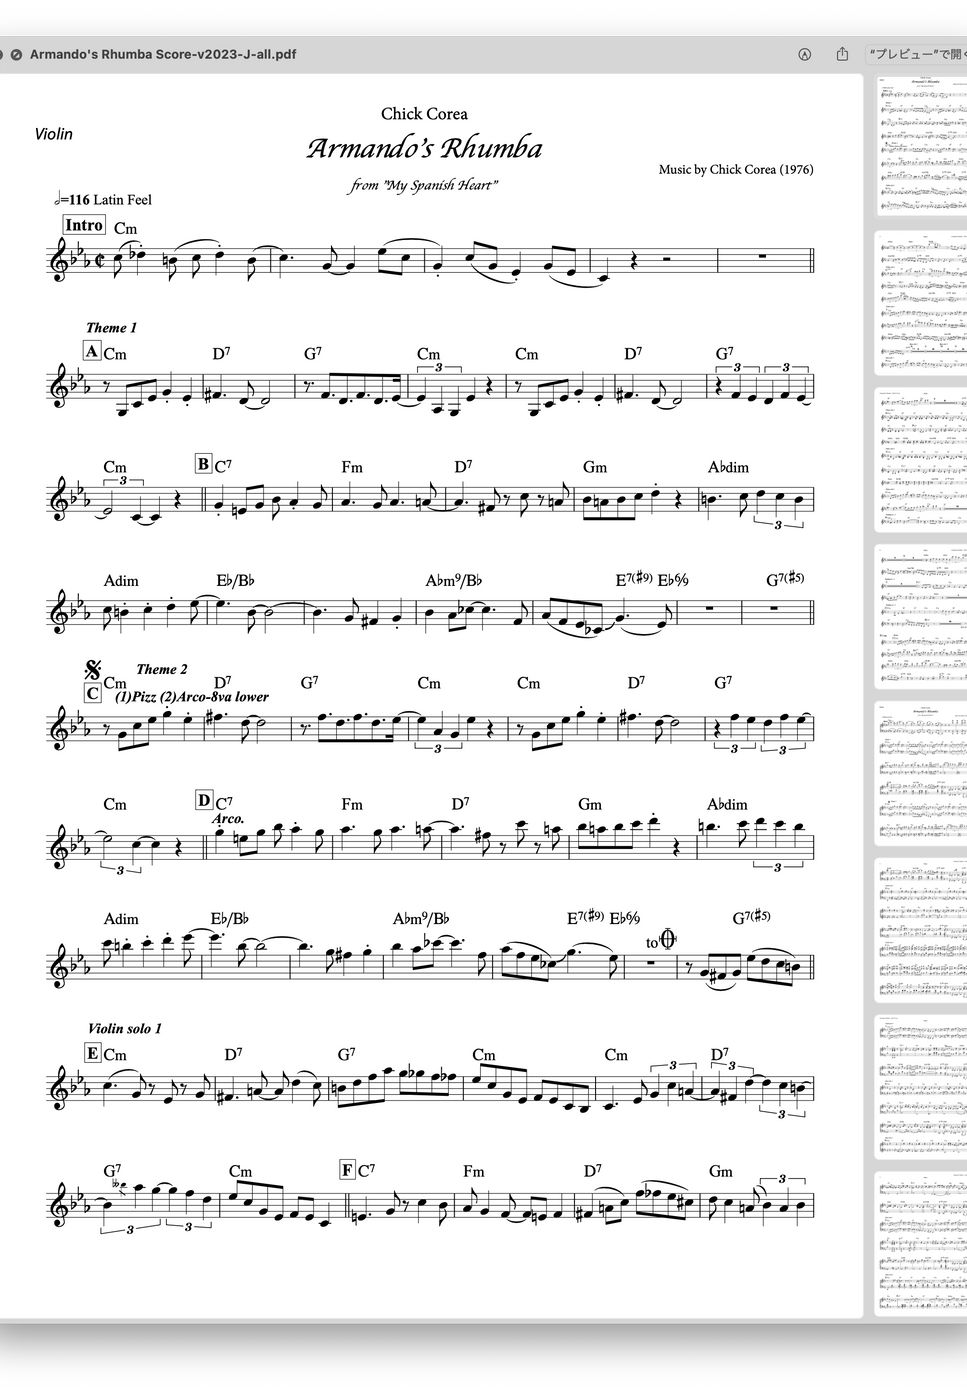 Chick Corea - Armando's Rumba - Chick Corea (for Violin) バイオリン完全コピー譜 by ebony-ivory